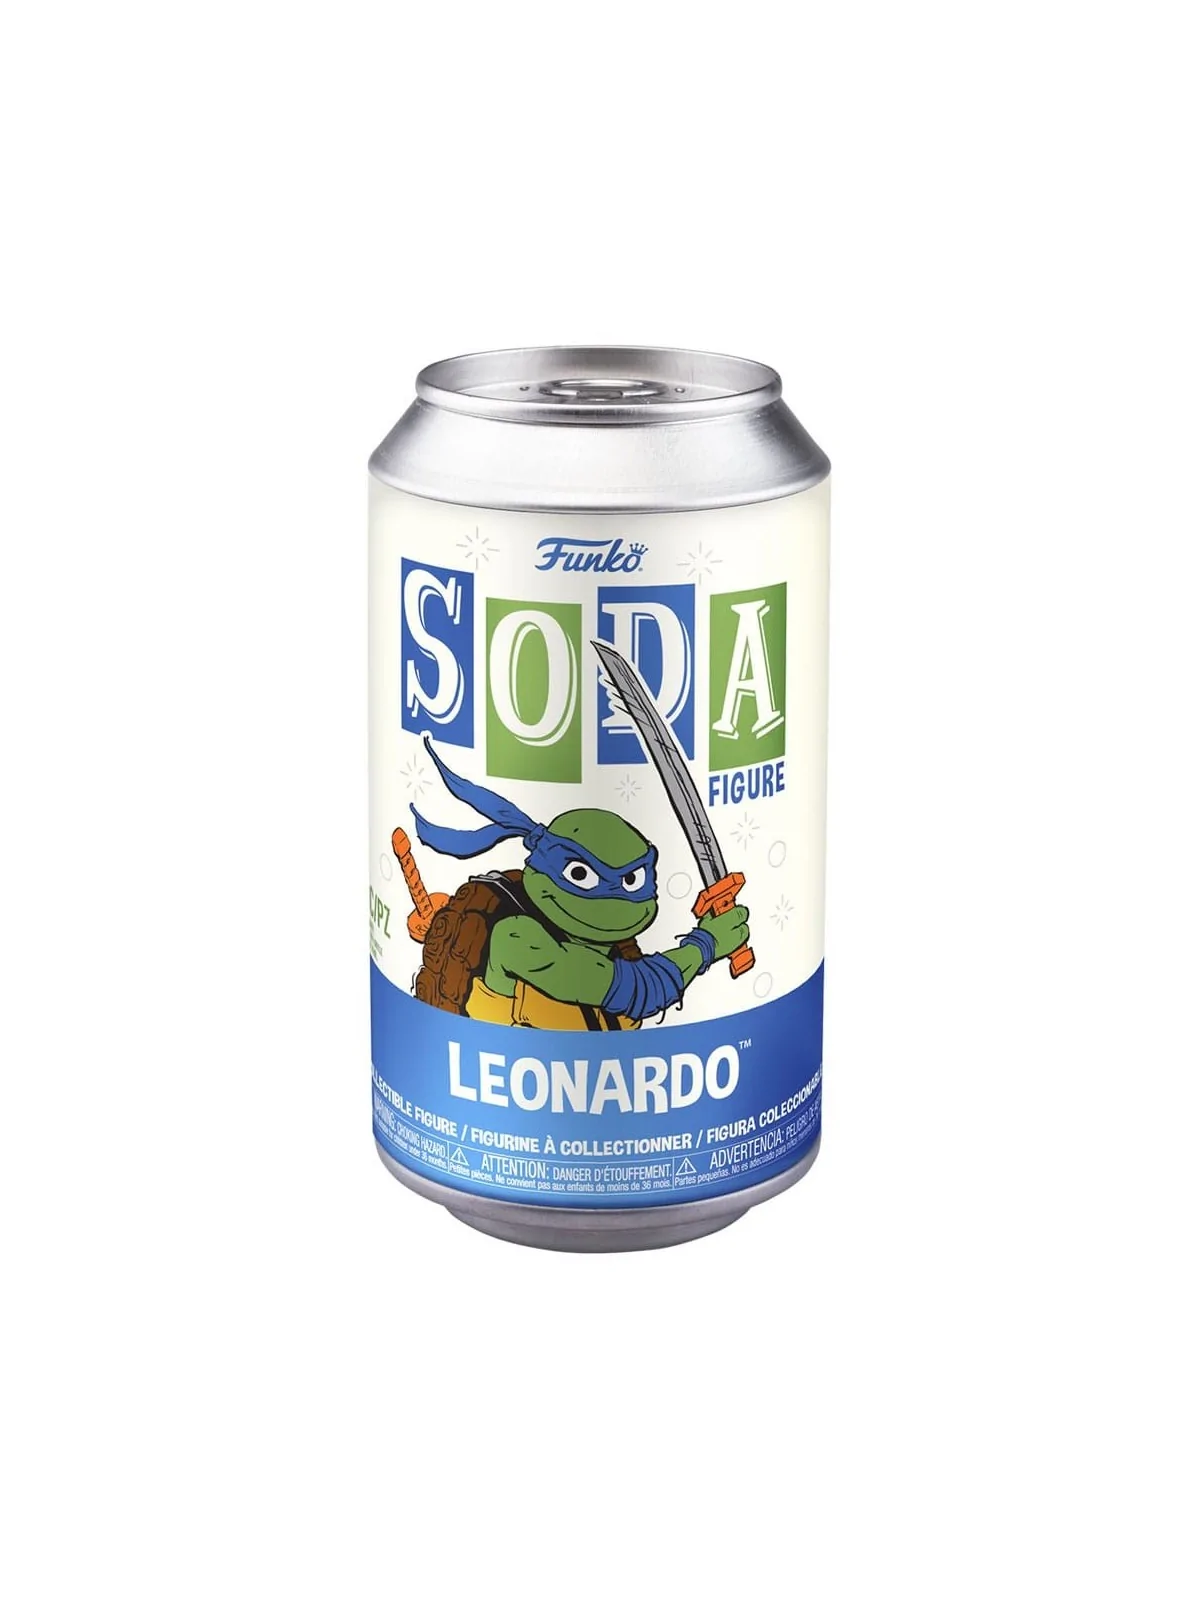 Comprar Funko Soda: Tortugas Ninja - Leo barato al mejor precio 17,00 